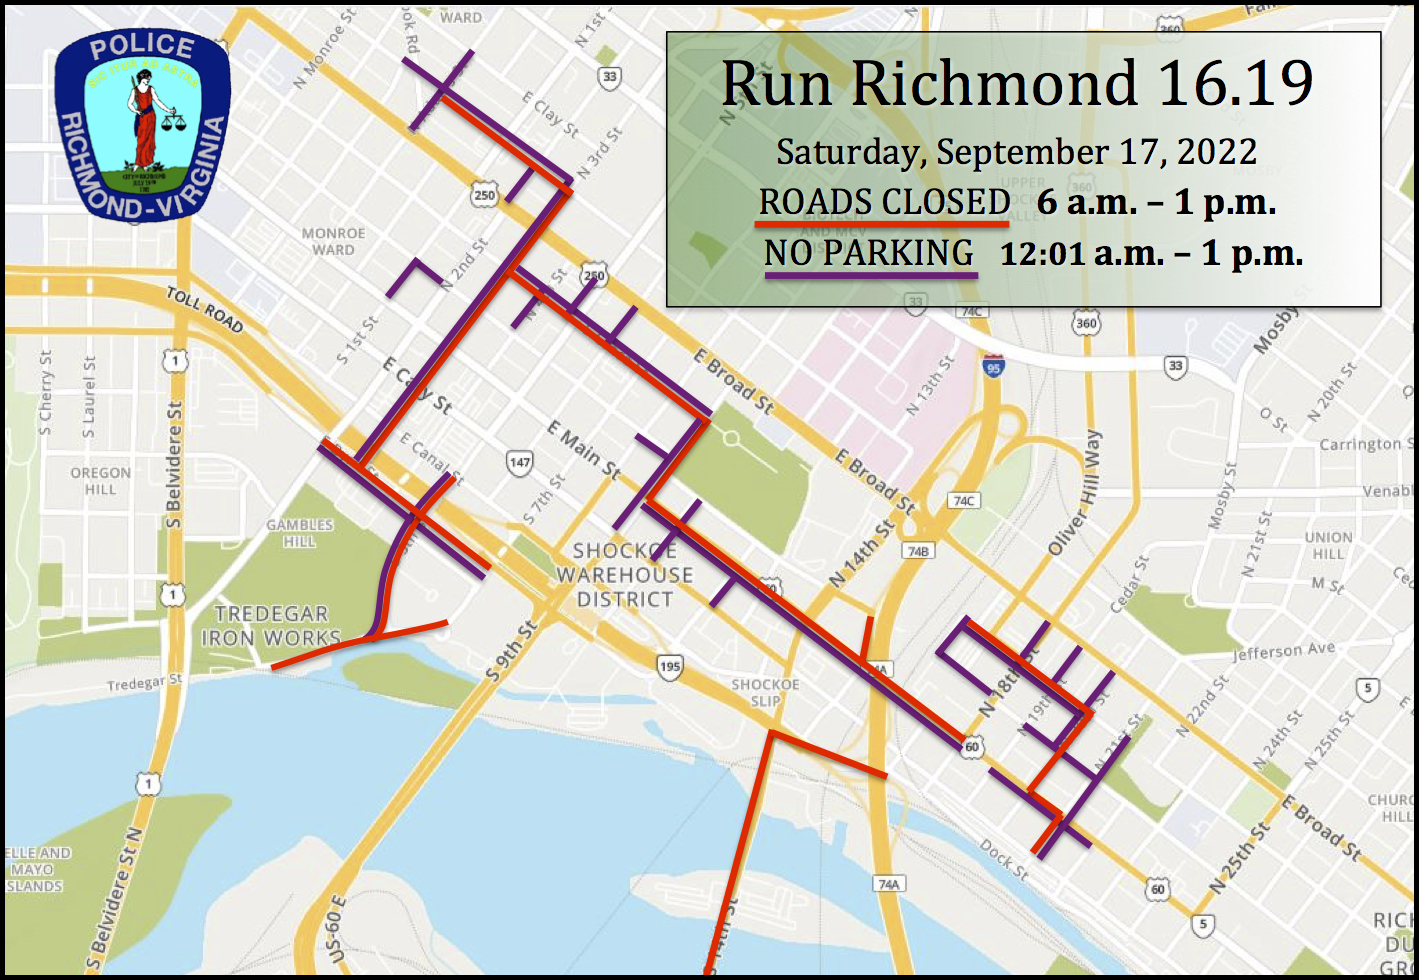 run richmond 16.19